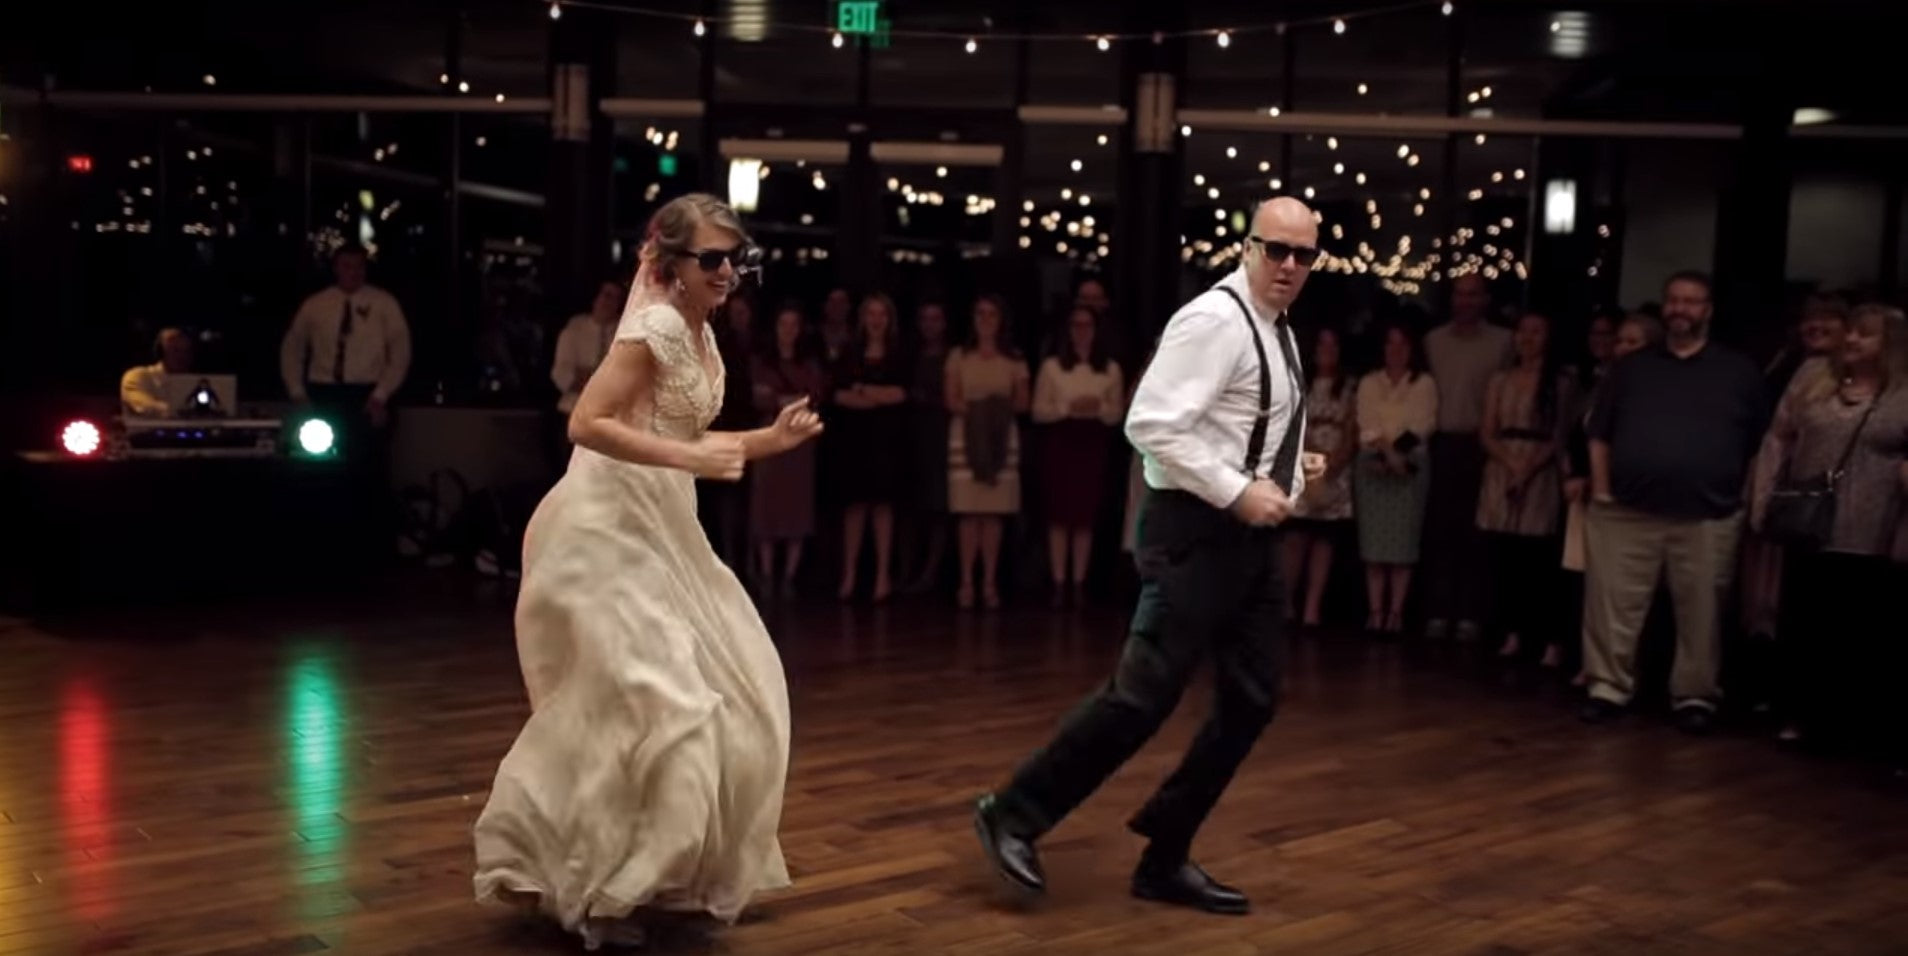 5 Brilliant Wedding Dance Ideas to Rock Your Social Media.